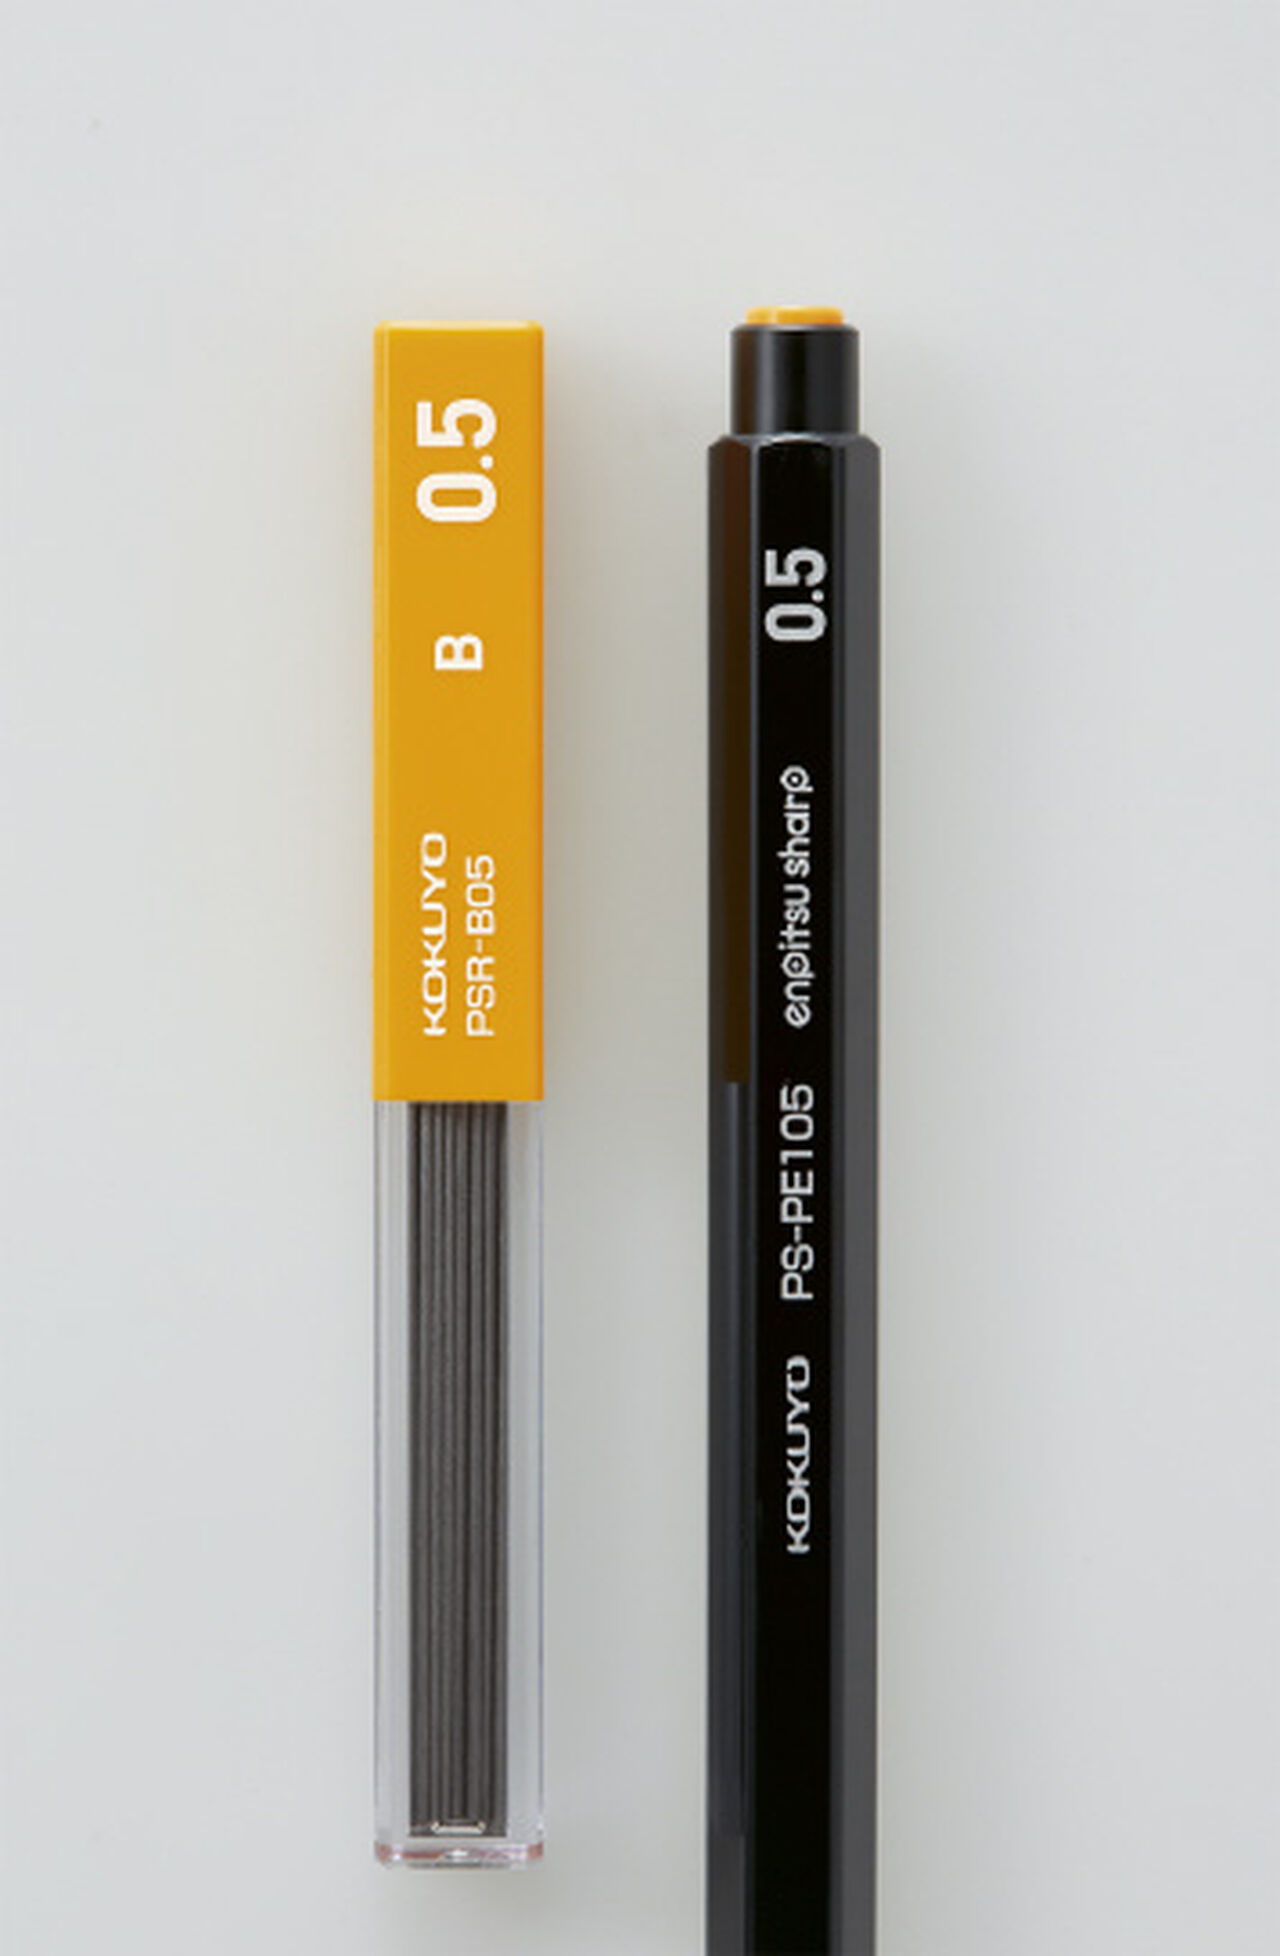 Kitaboshi Enpitsu Pencil Lead Sharpener for Pencil OTP-150SP